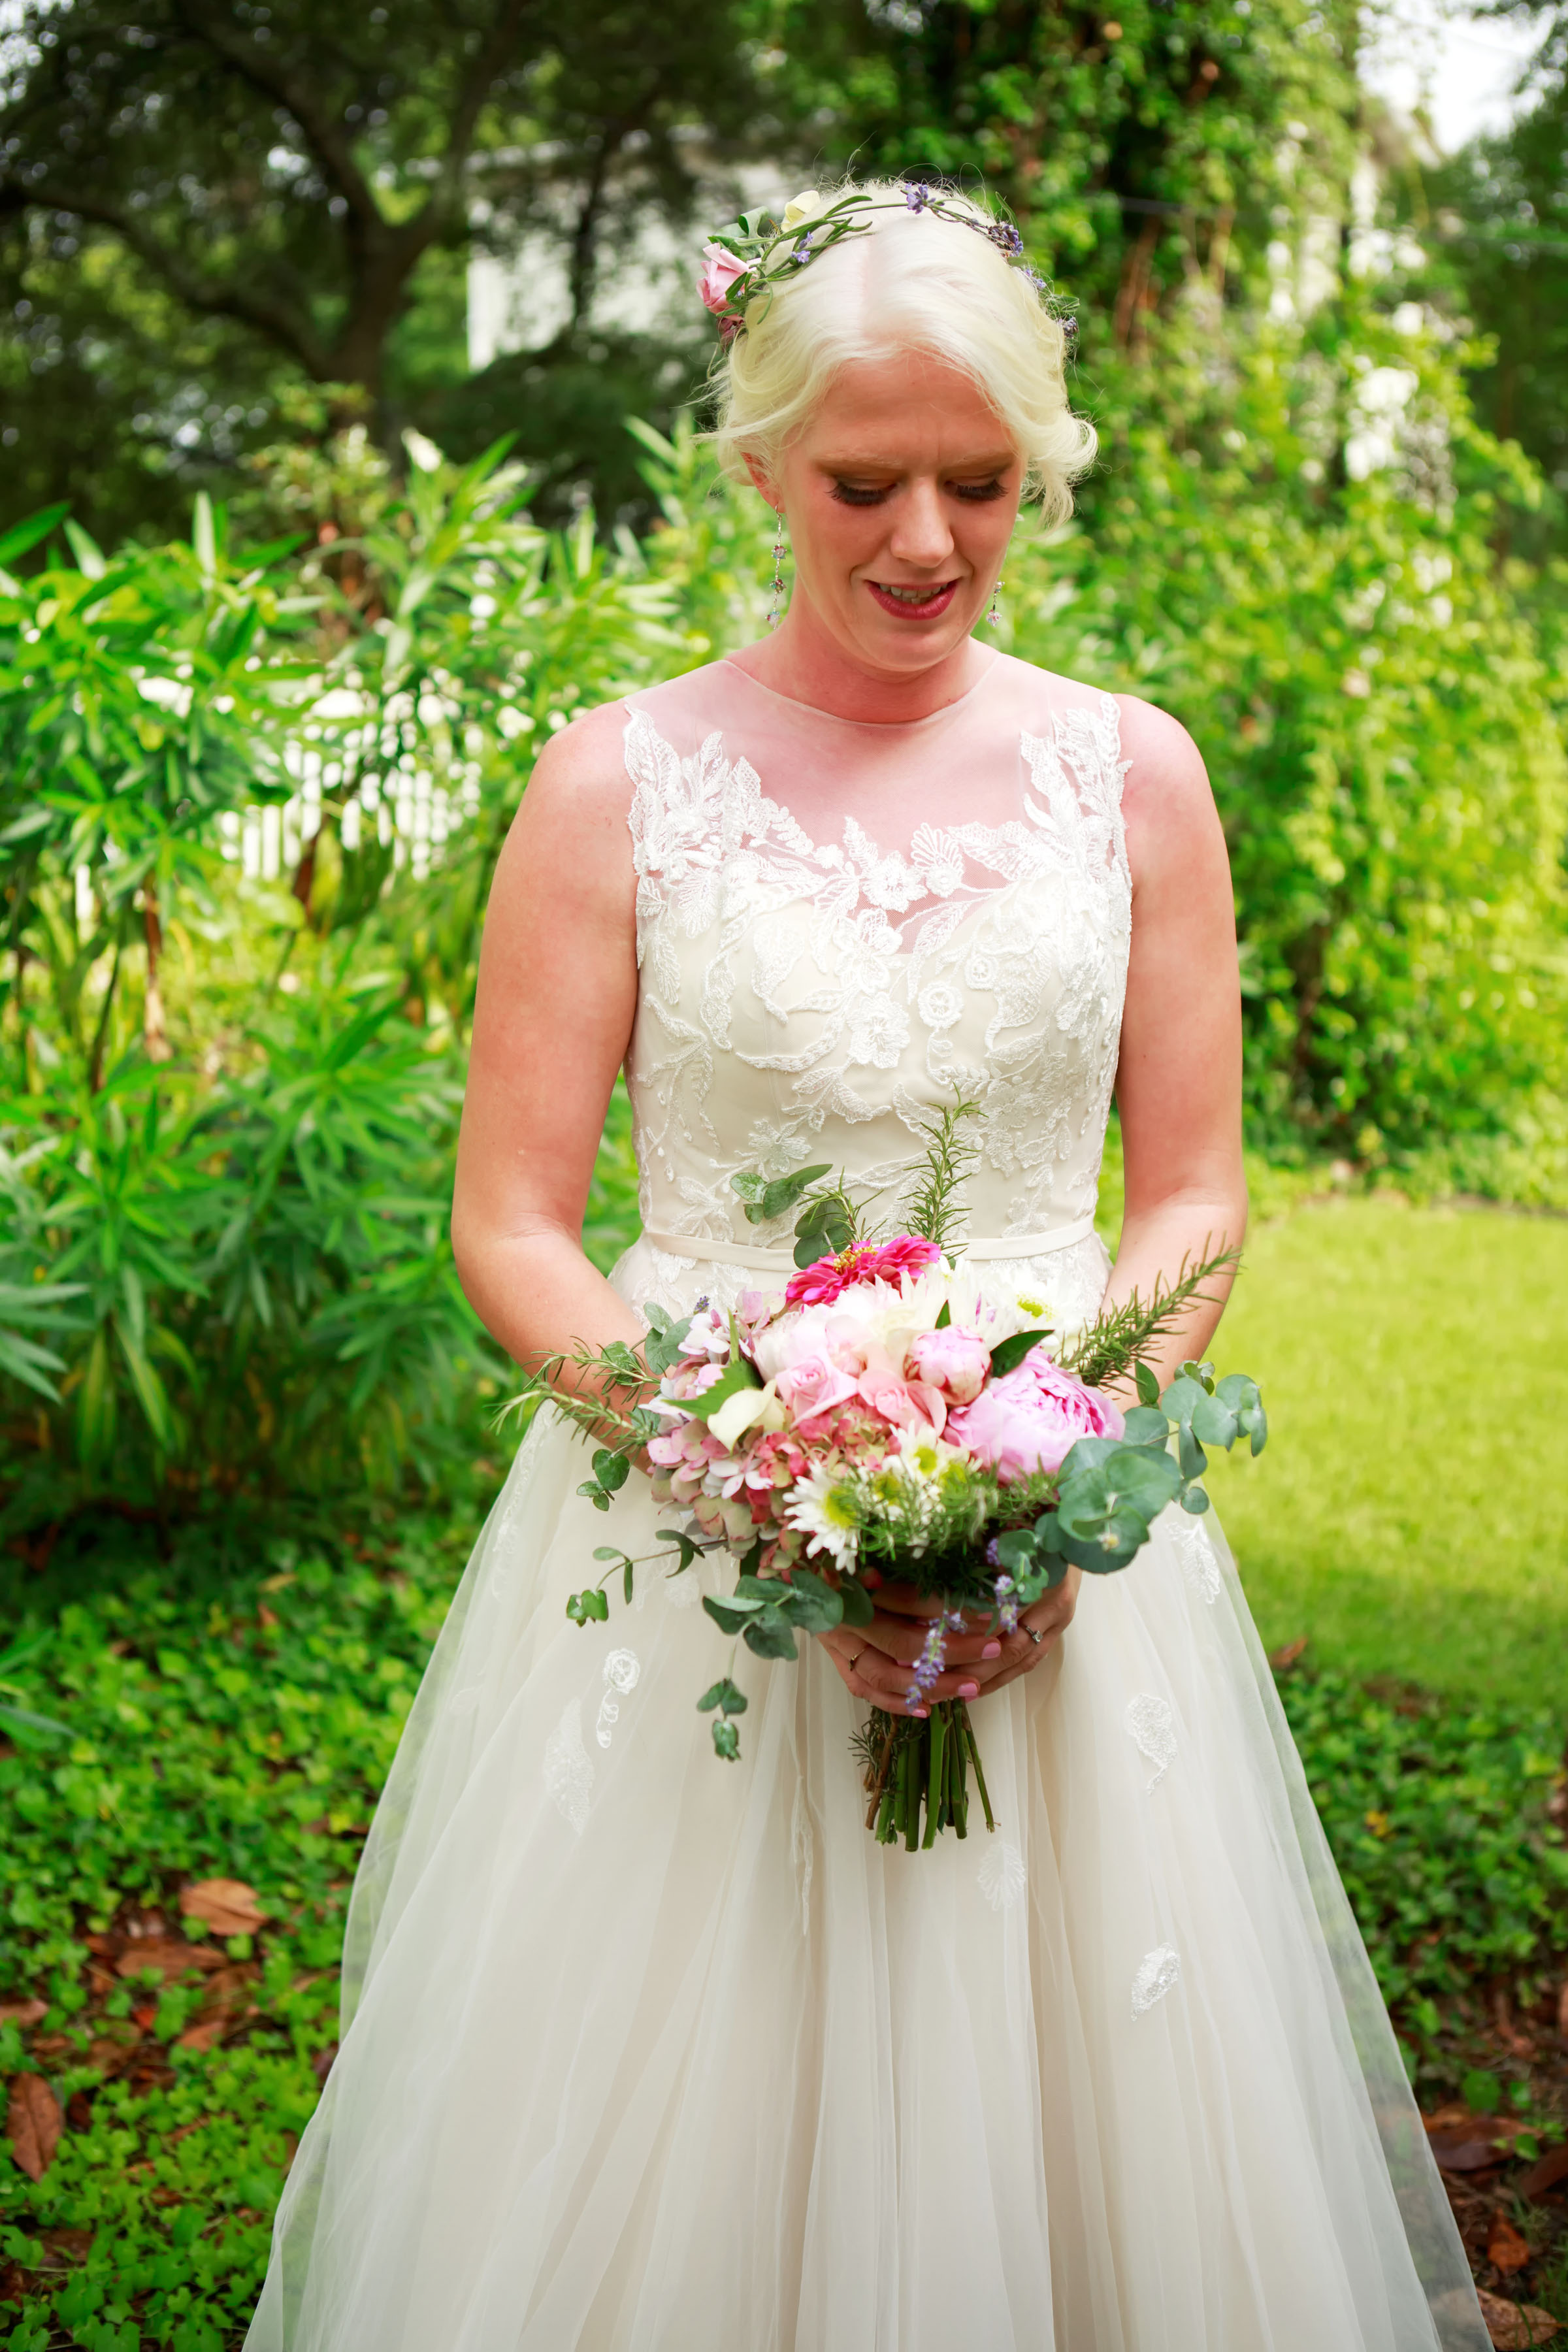 128-South-Wedding-Tiffany-Abruzzo-Photography-Bride-&-Groom-12.jpg